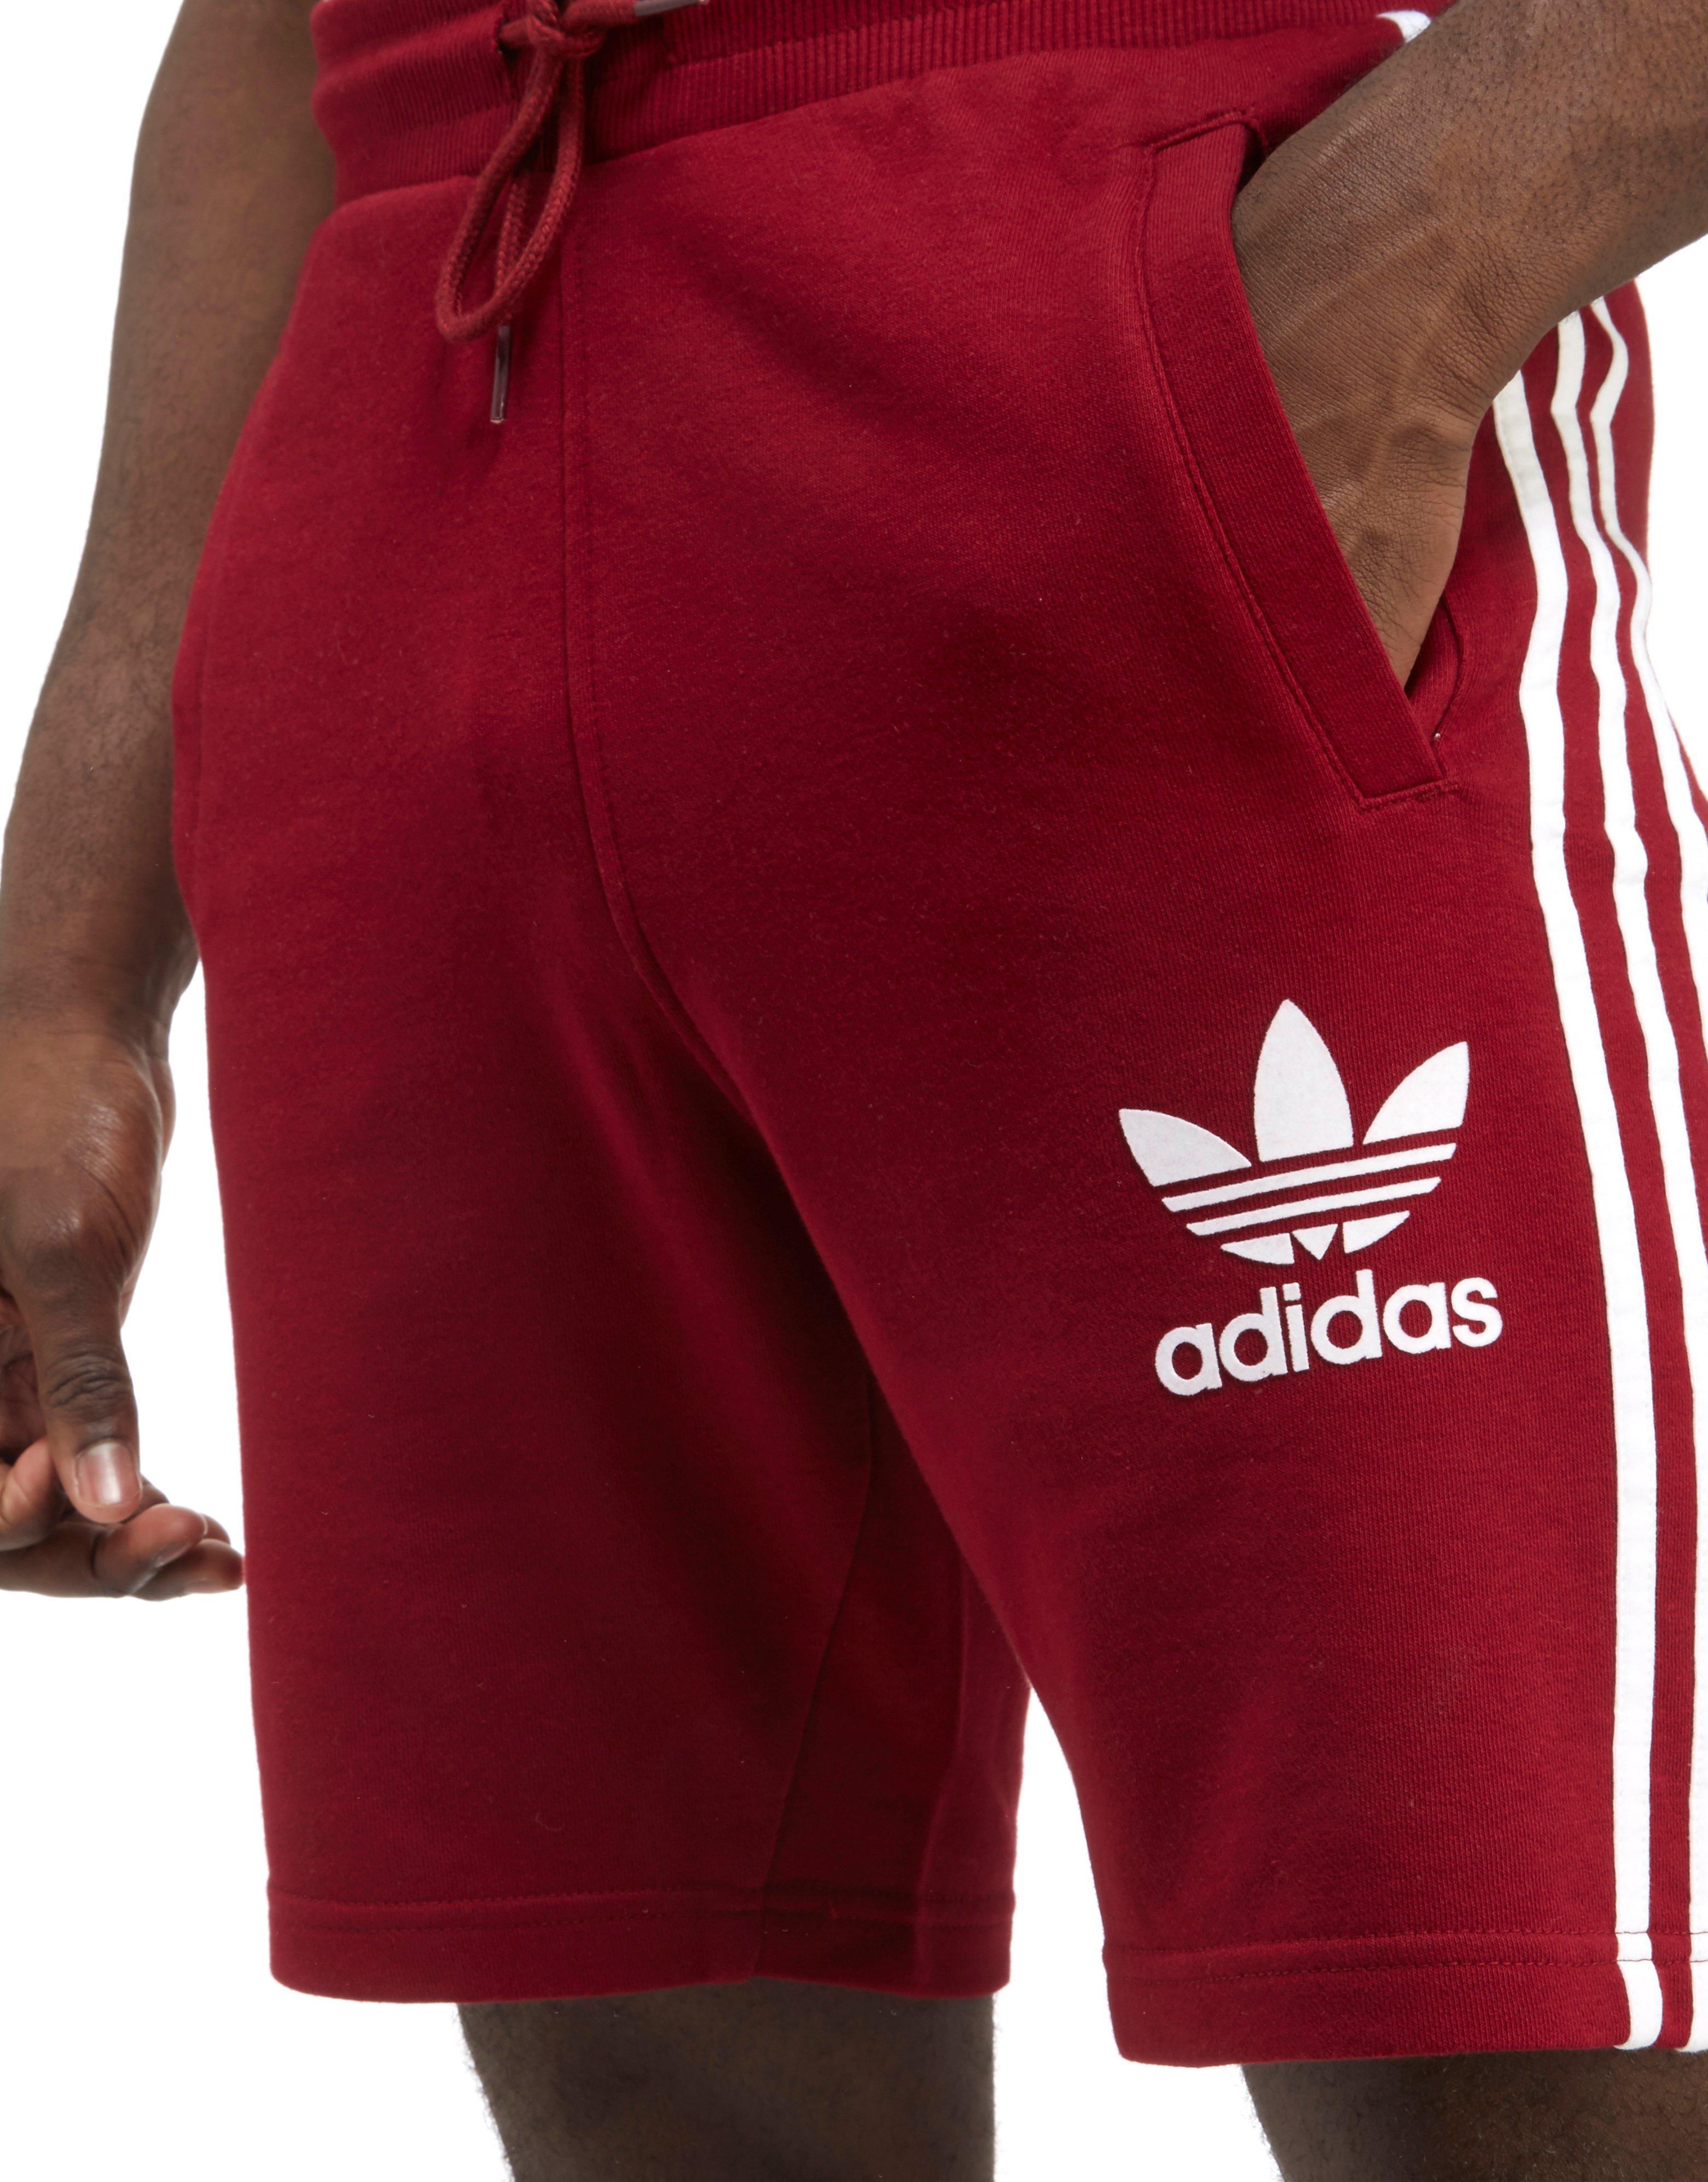 Lyst - adidas Originals California Shorts in Red for Men